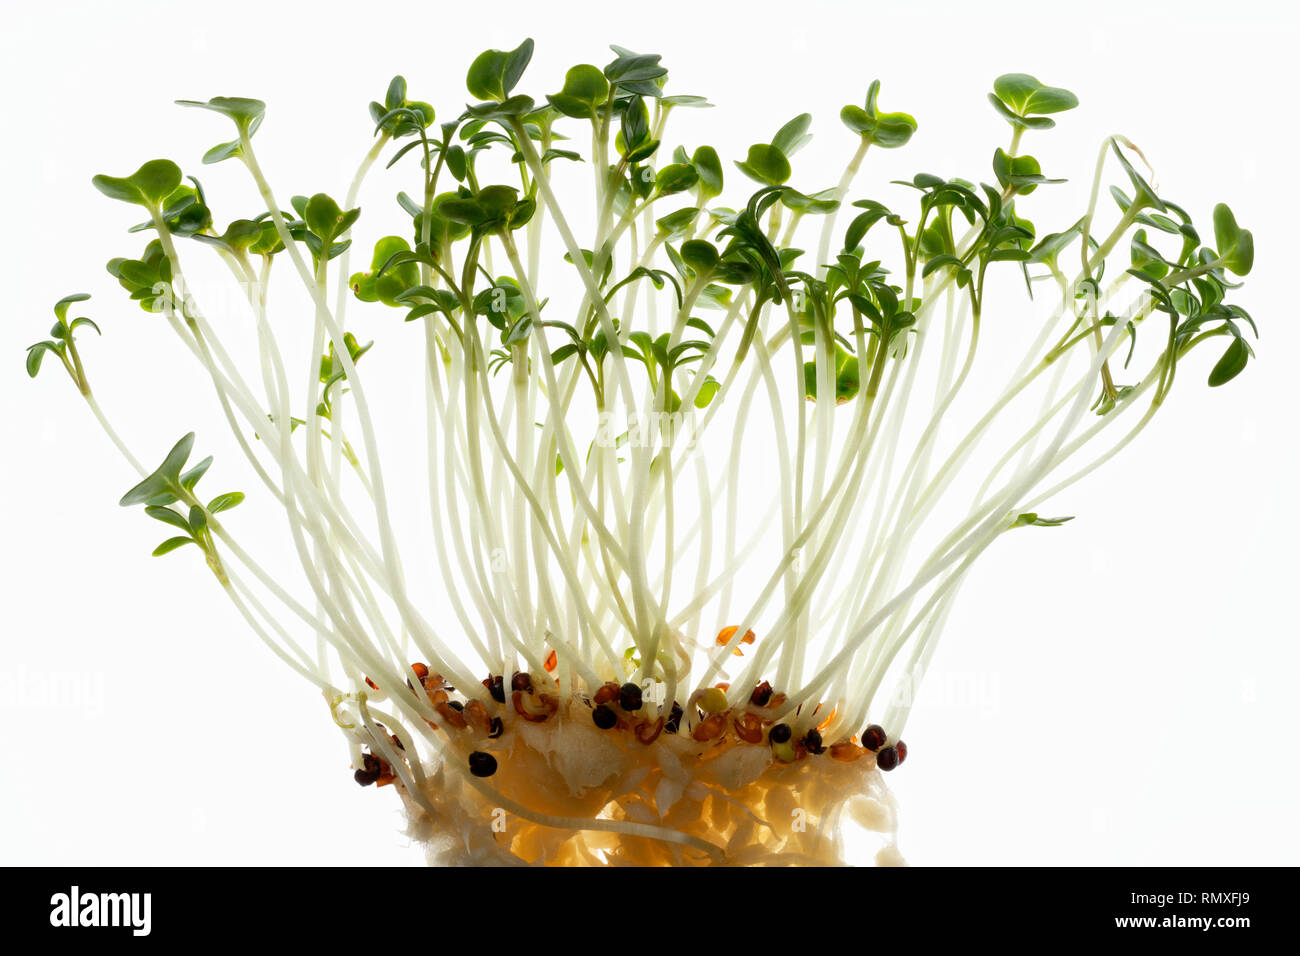 Garden cress. Edible salad plant. Also known as mustard cress. Stock Photo